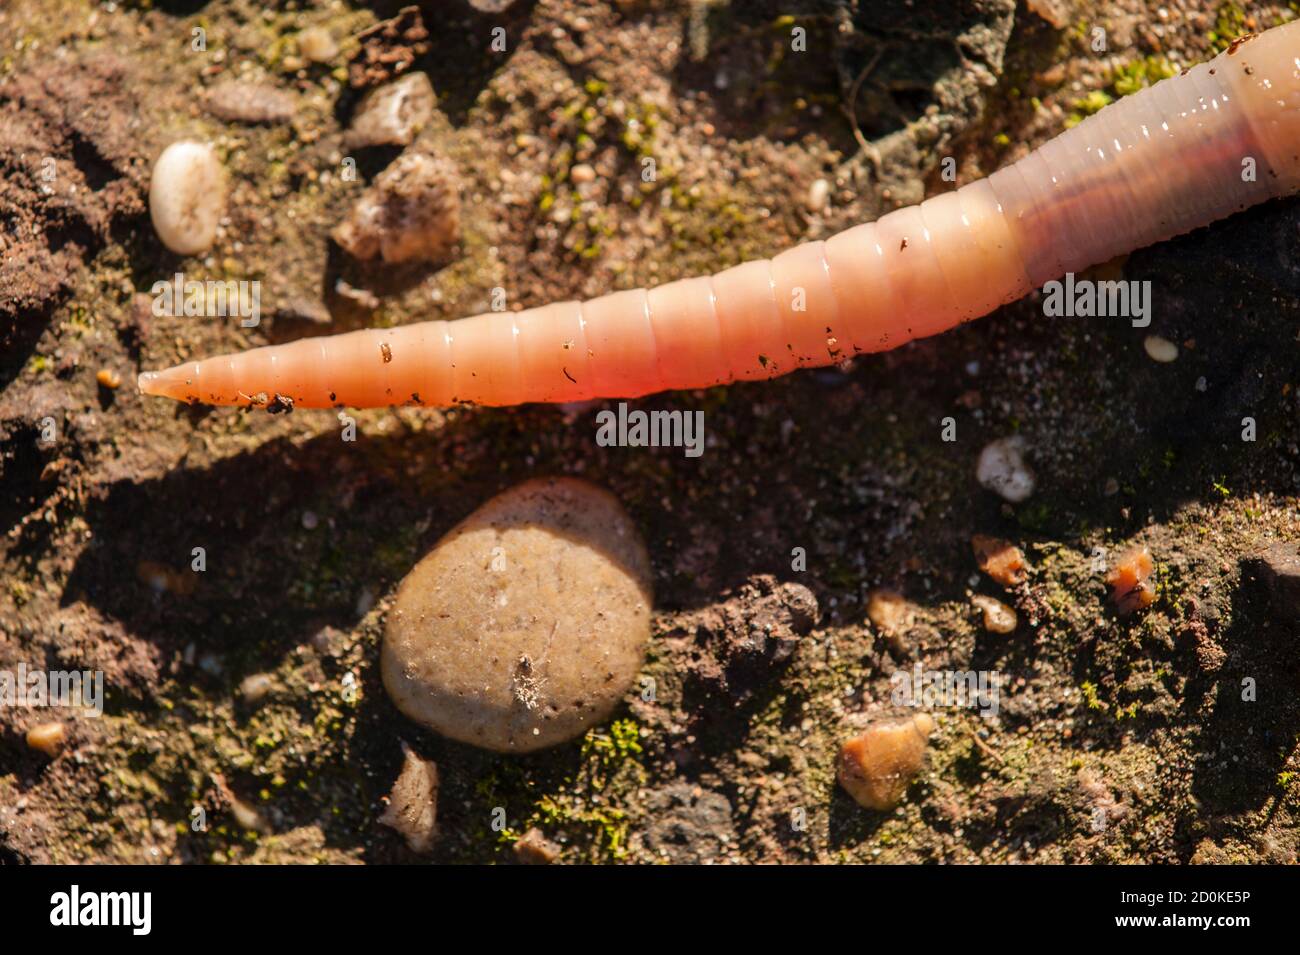 https://c8.alamy.com/comp/2D0KE5P/earthworm-lombricus-terrestris-also-know-as-lob-worm-nightcrawler-and-dew-worm-2D0KE5P.jpg